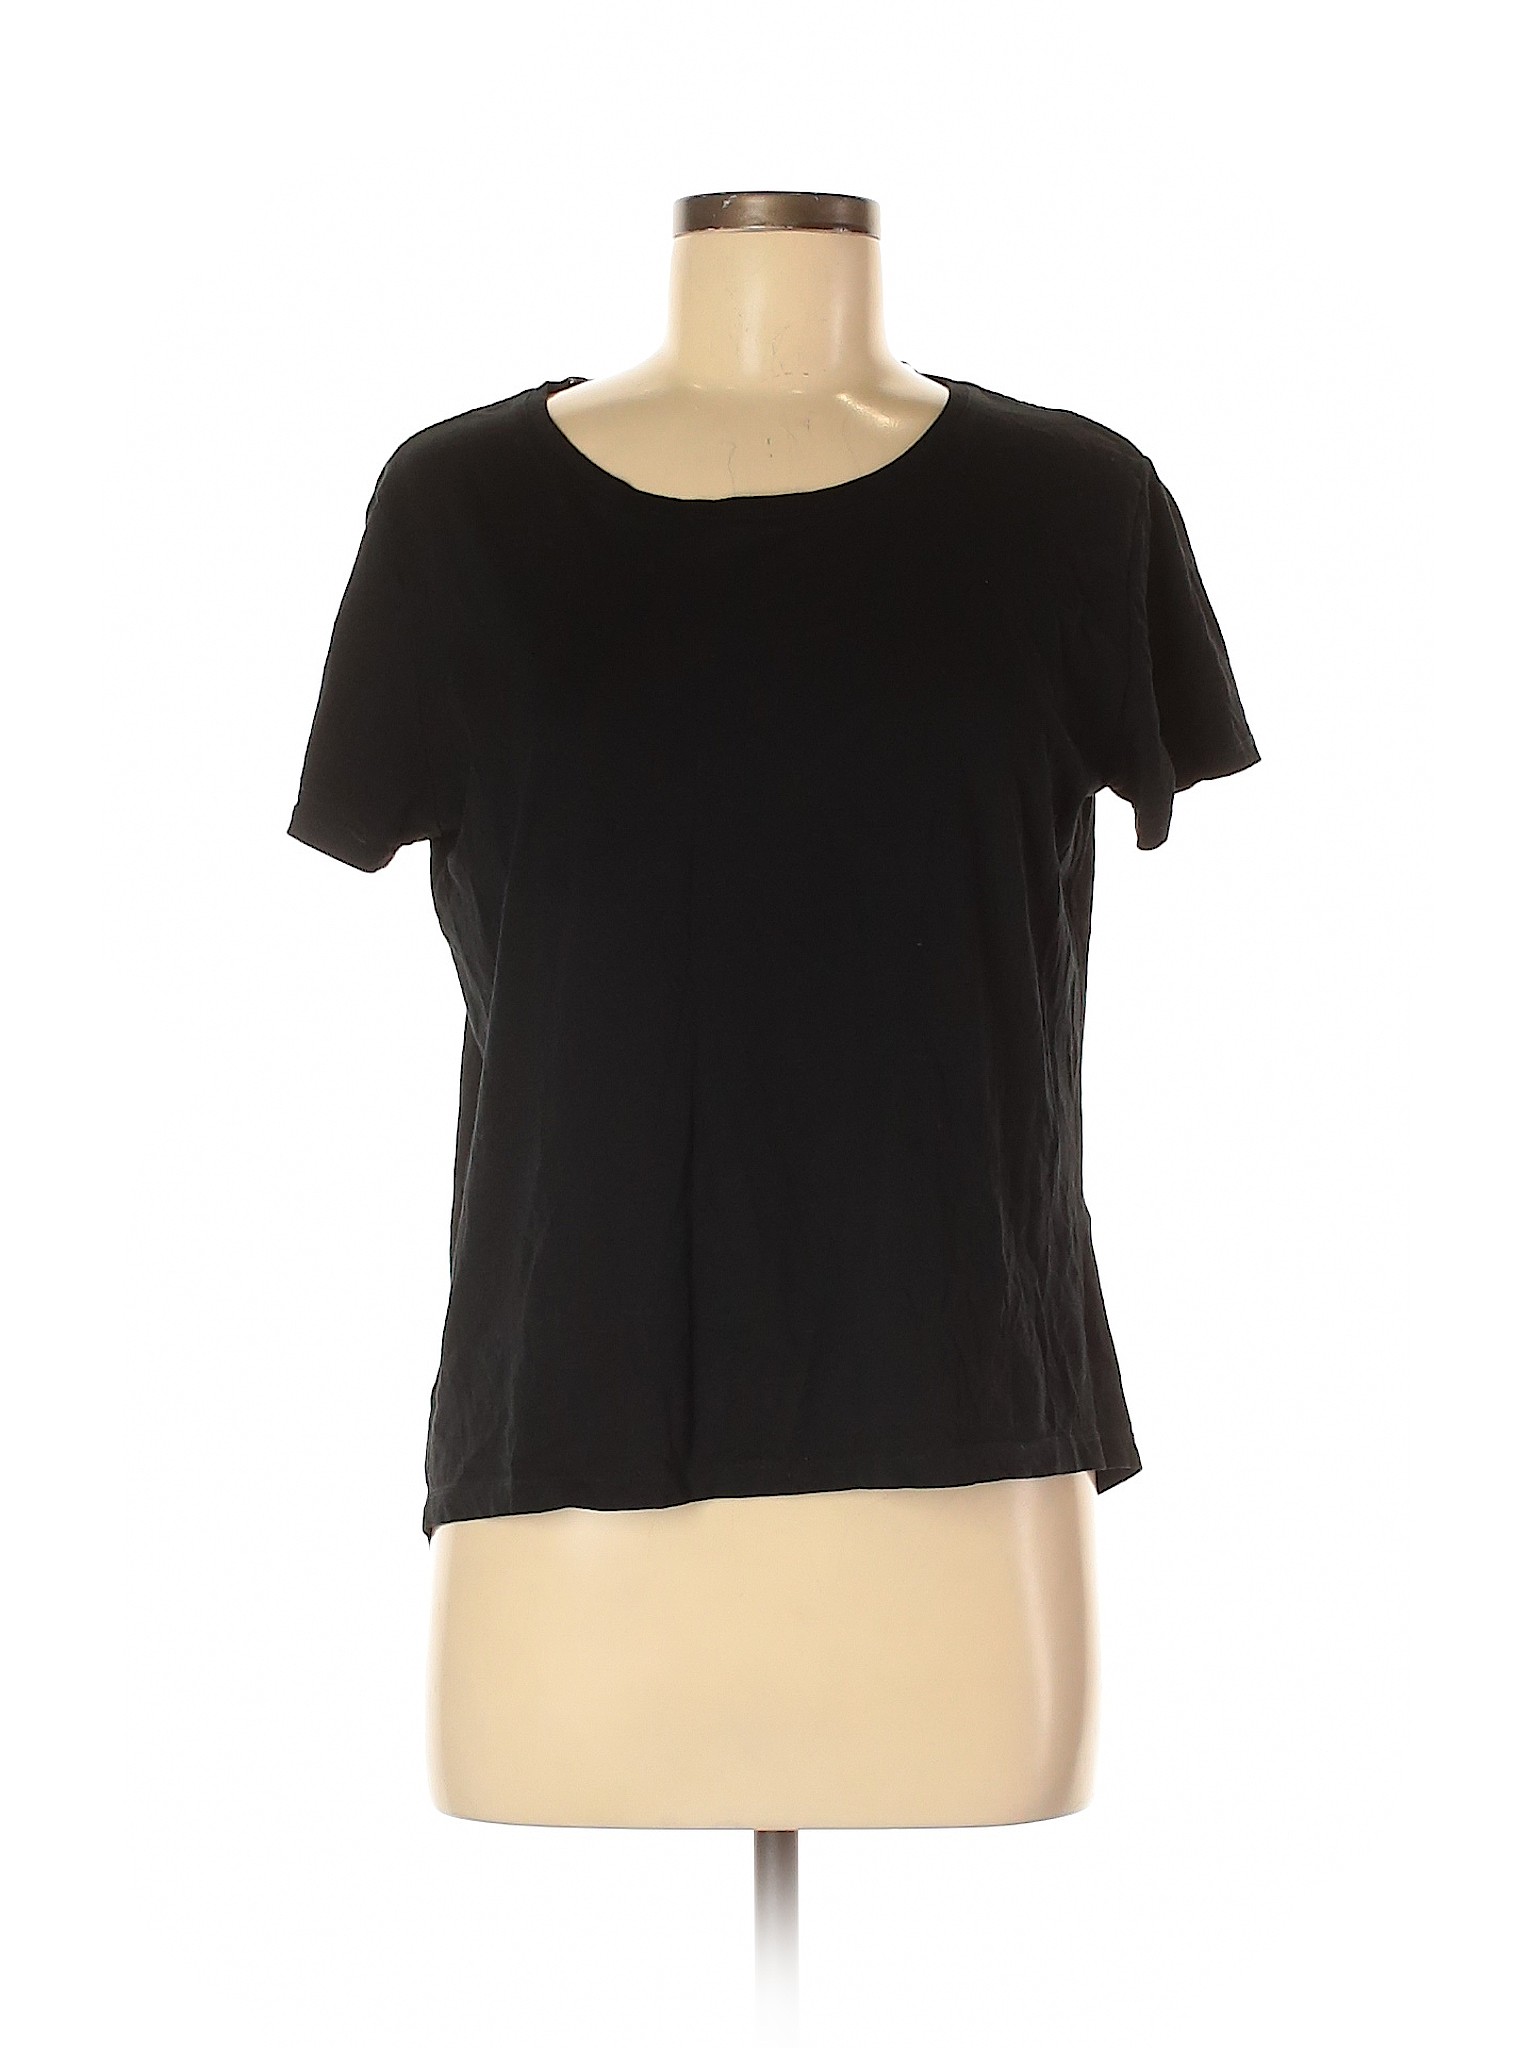 Zara W&B Collection Women Black Short Sleeve T-Shirt M | eBay